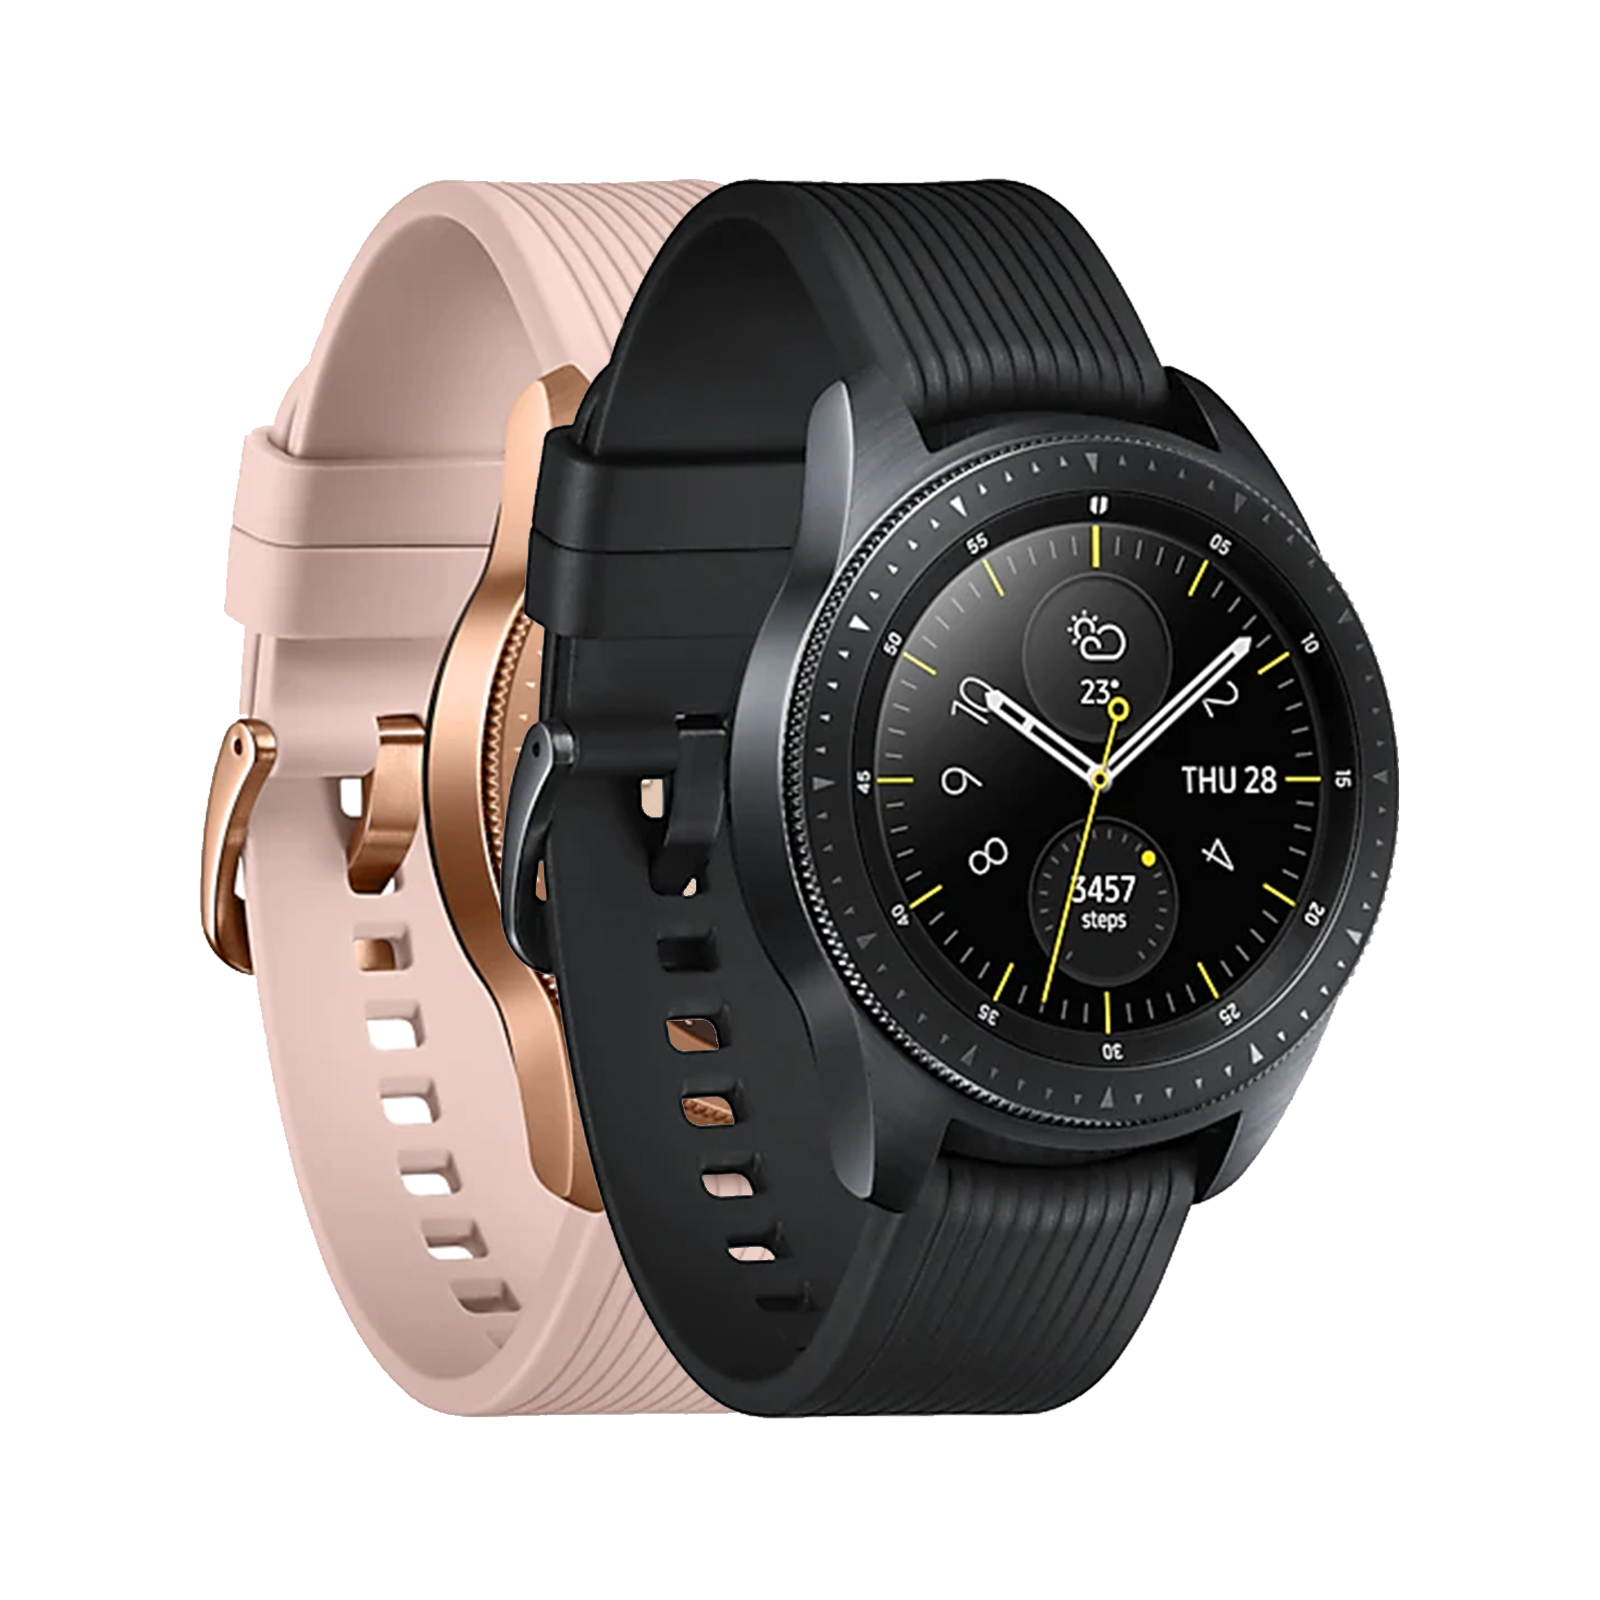 Samsung Galaxy Watch 42mm - Brand New